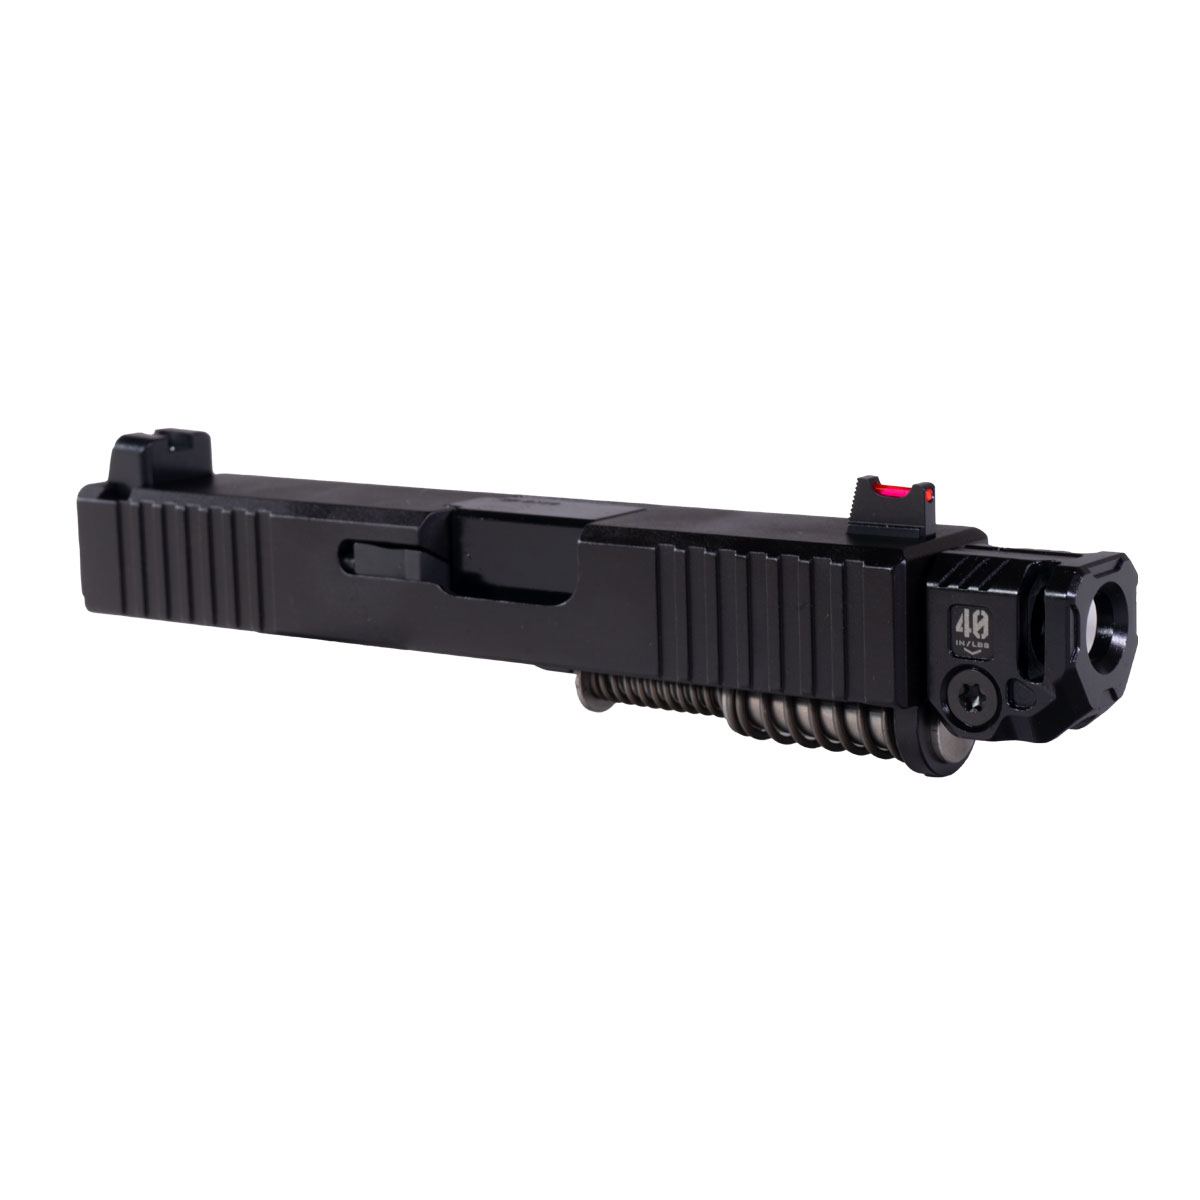 MMC 'Twenty-six w/ Strike Industries Compensator' 9mm Complete Slide Kit - Glock 26 Gen 1-2 Compatible